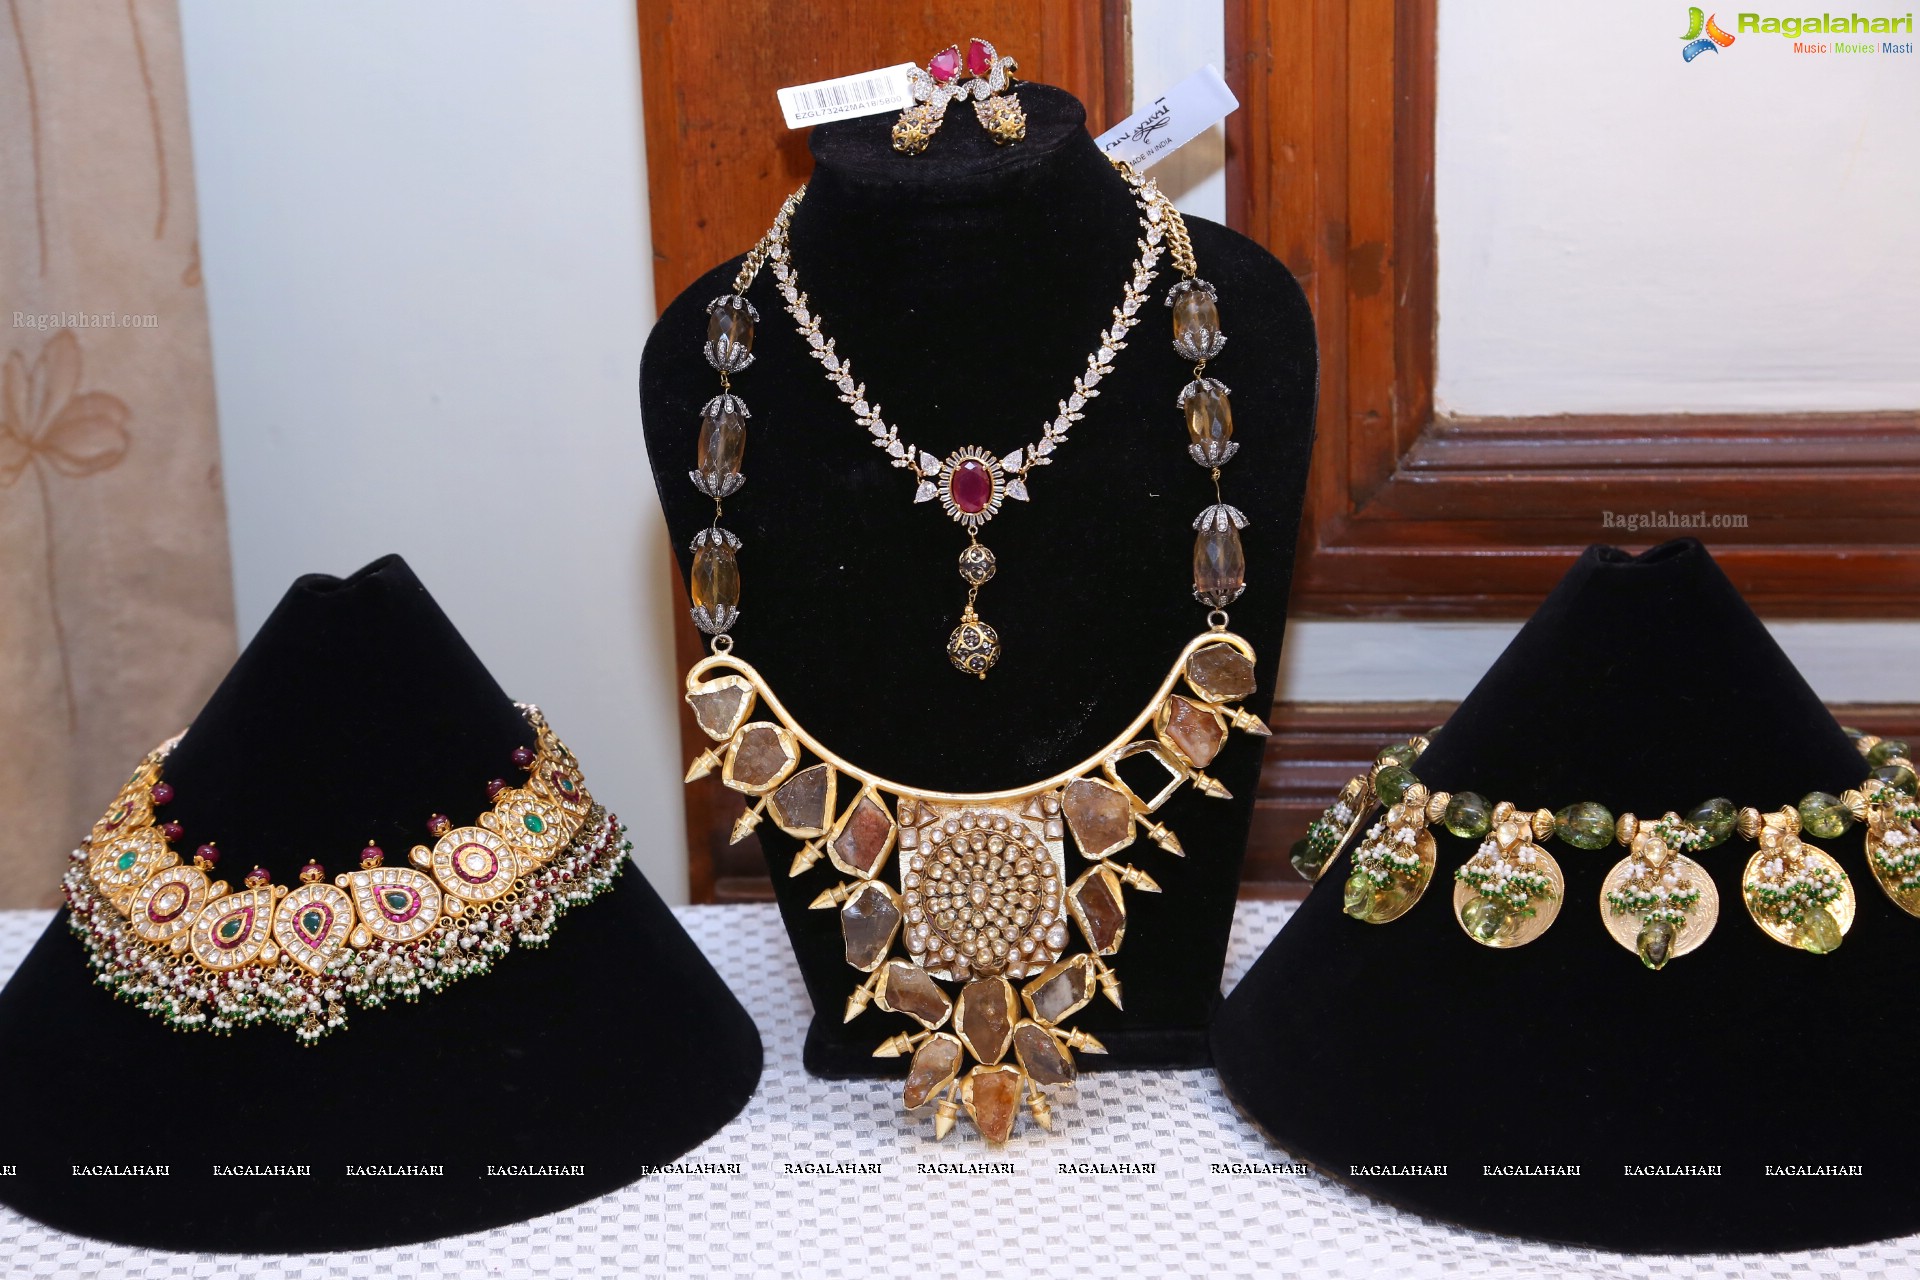 Padmavat Collection exhibition by Art Karat